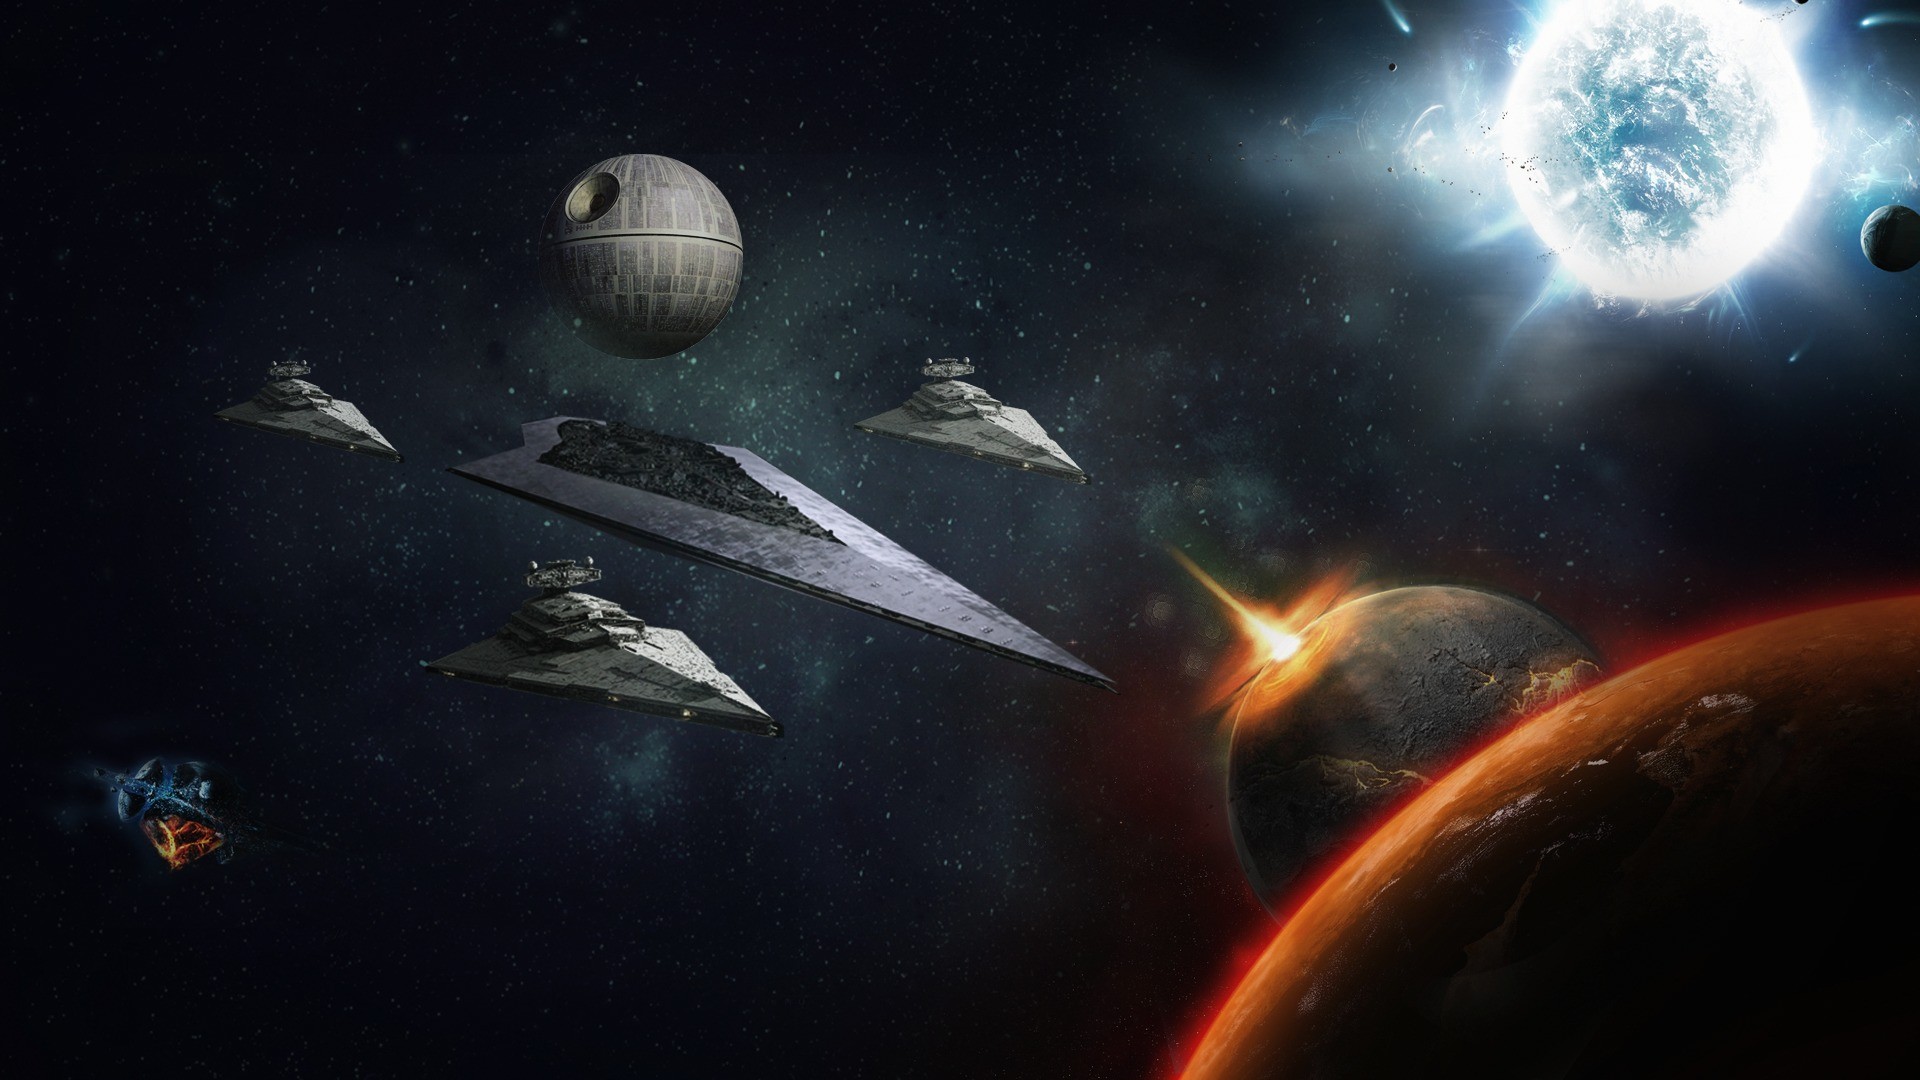 Star Wars death star fantasy game planet space starship star